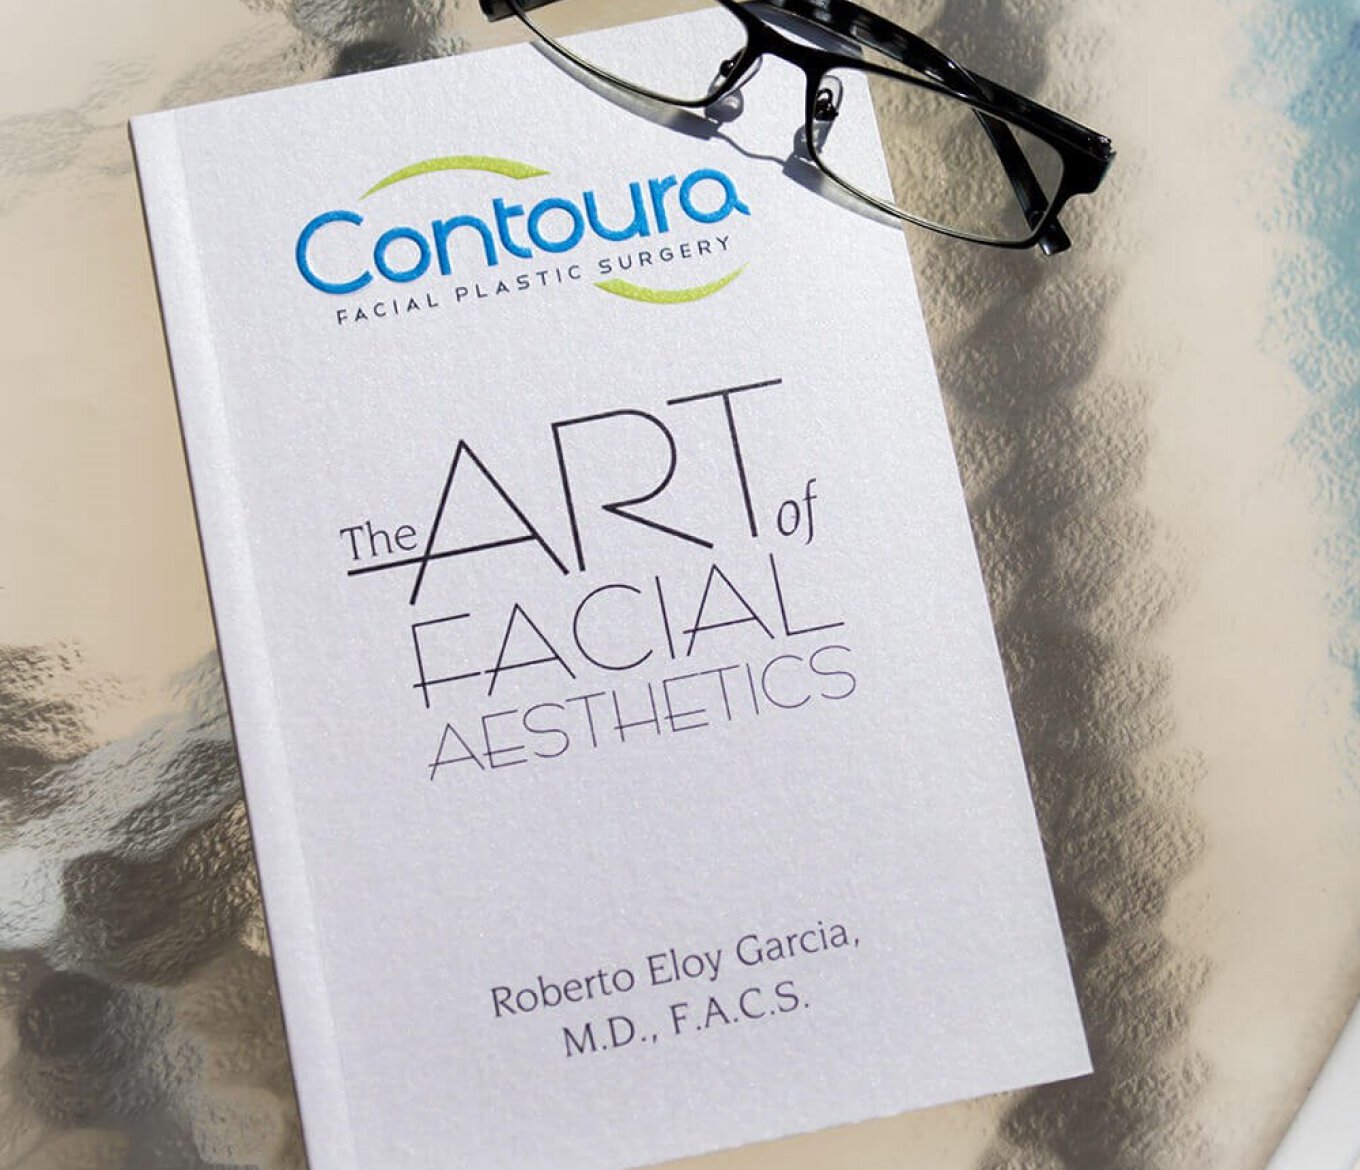 The Art of Facial Aesthetics book by Roberto Garcia M.D.